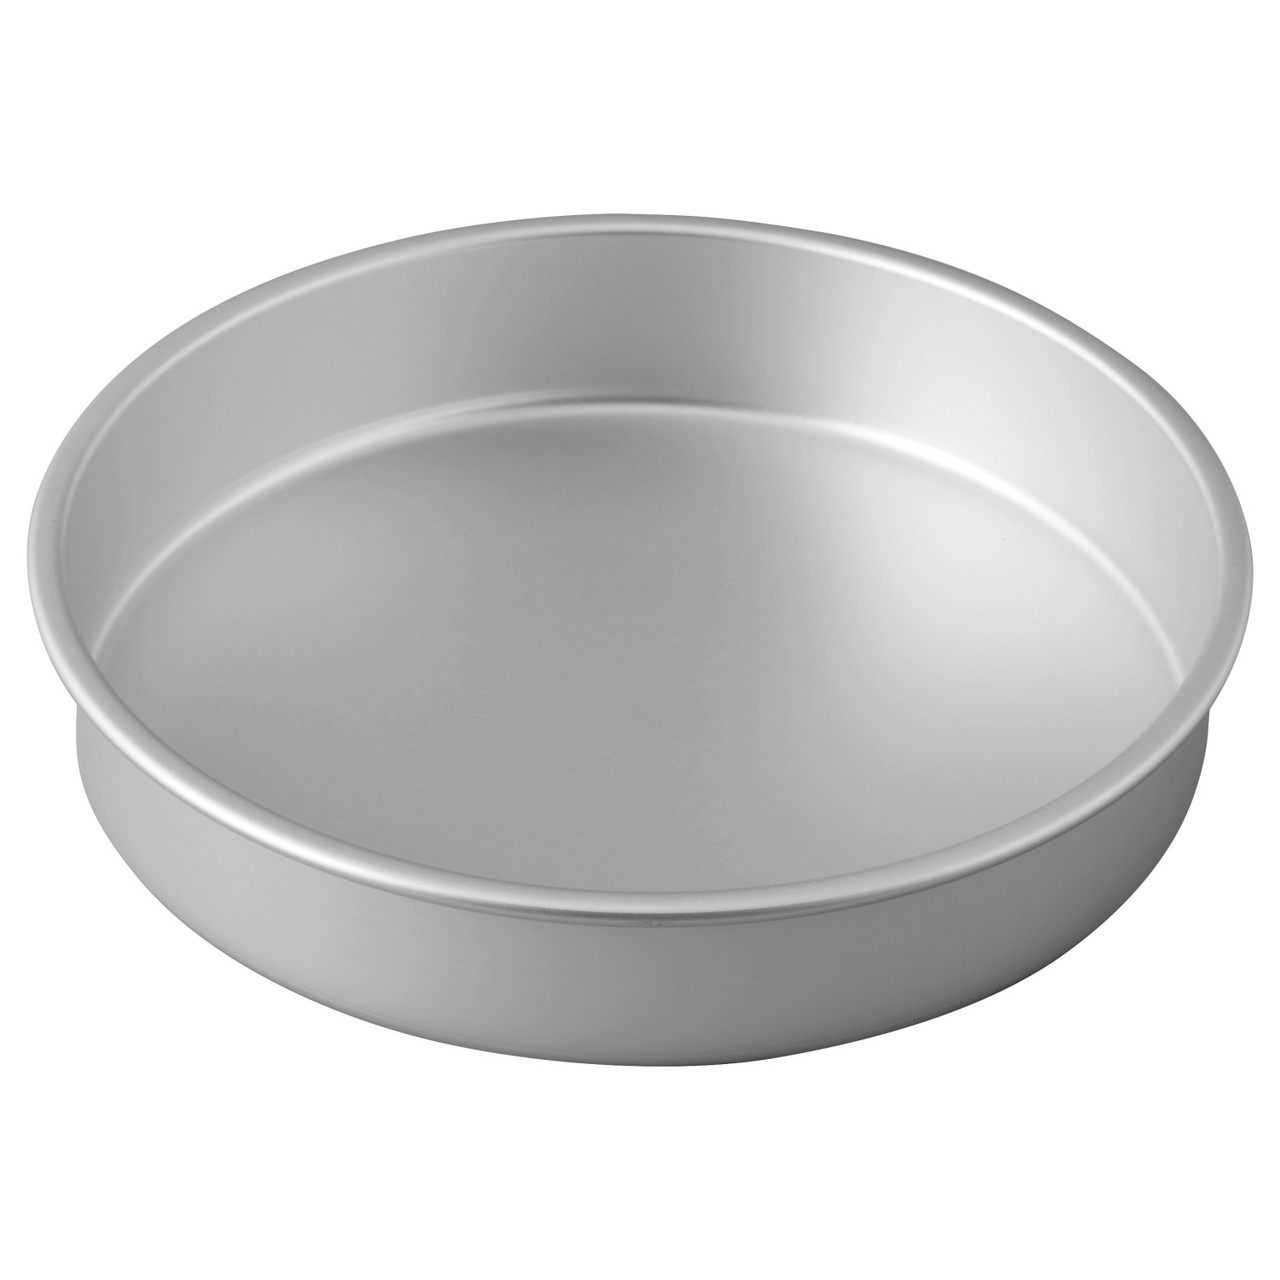 Silver Anodised Round Cake Pan, 22.5 x 7.5cm - Bakemaster Australia